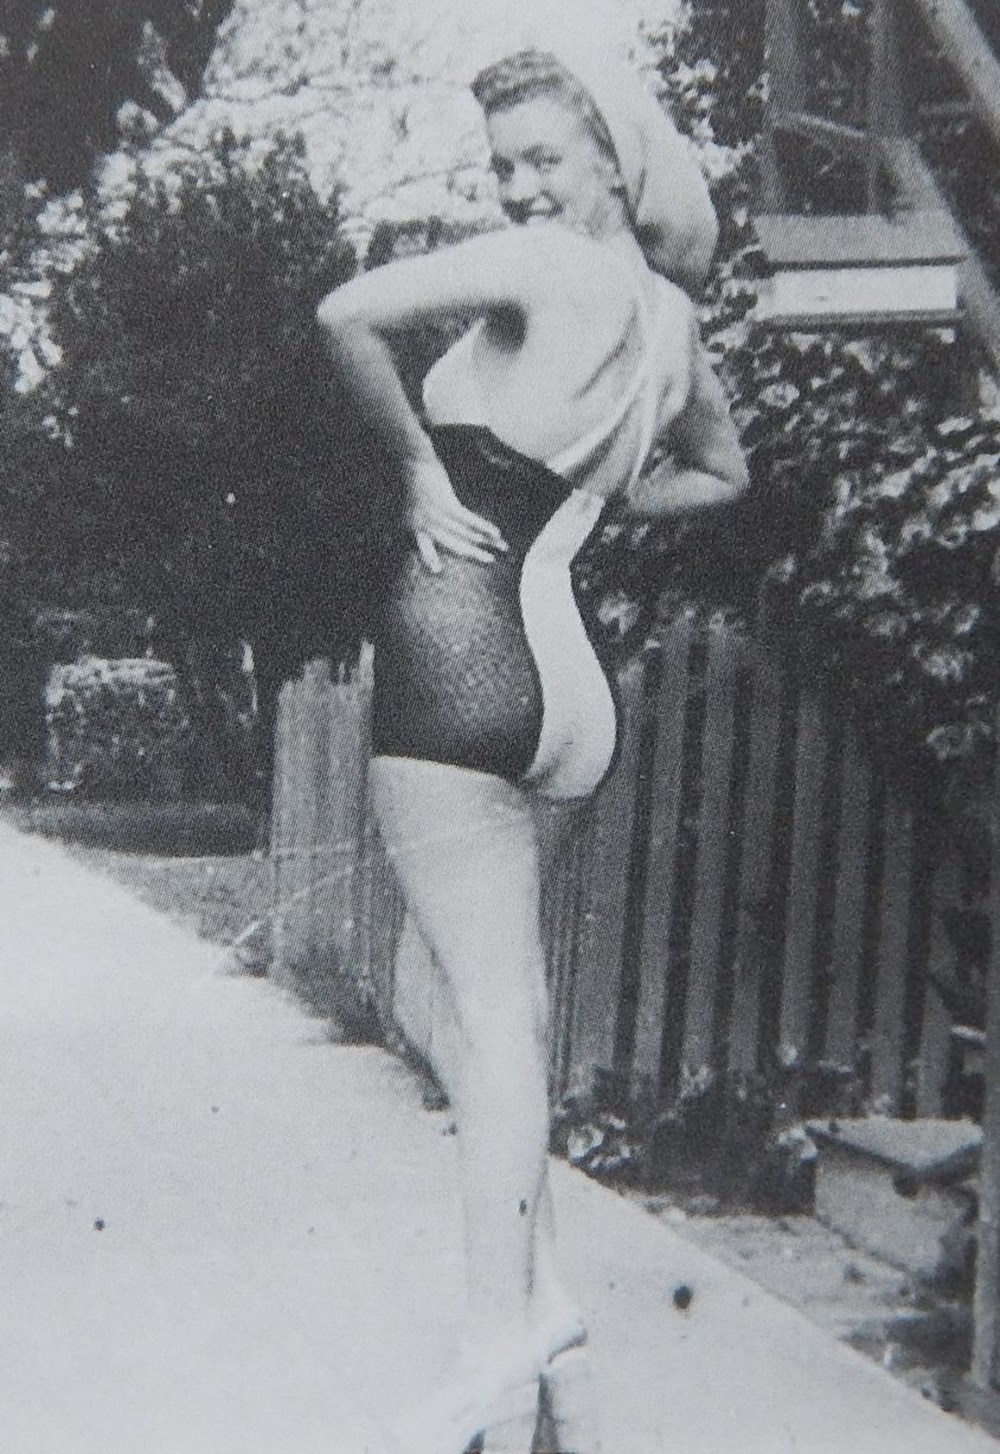 Фигура Мерлин Монро - образец женской элегантности